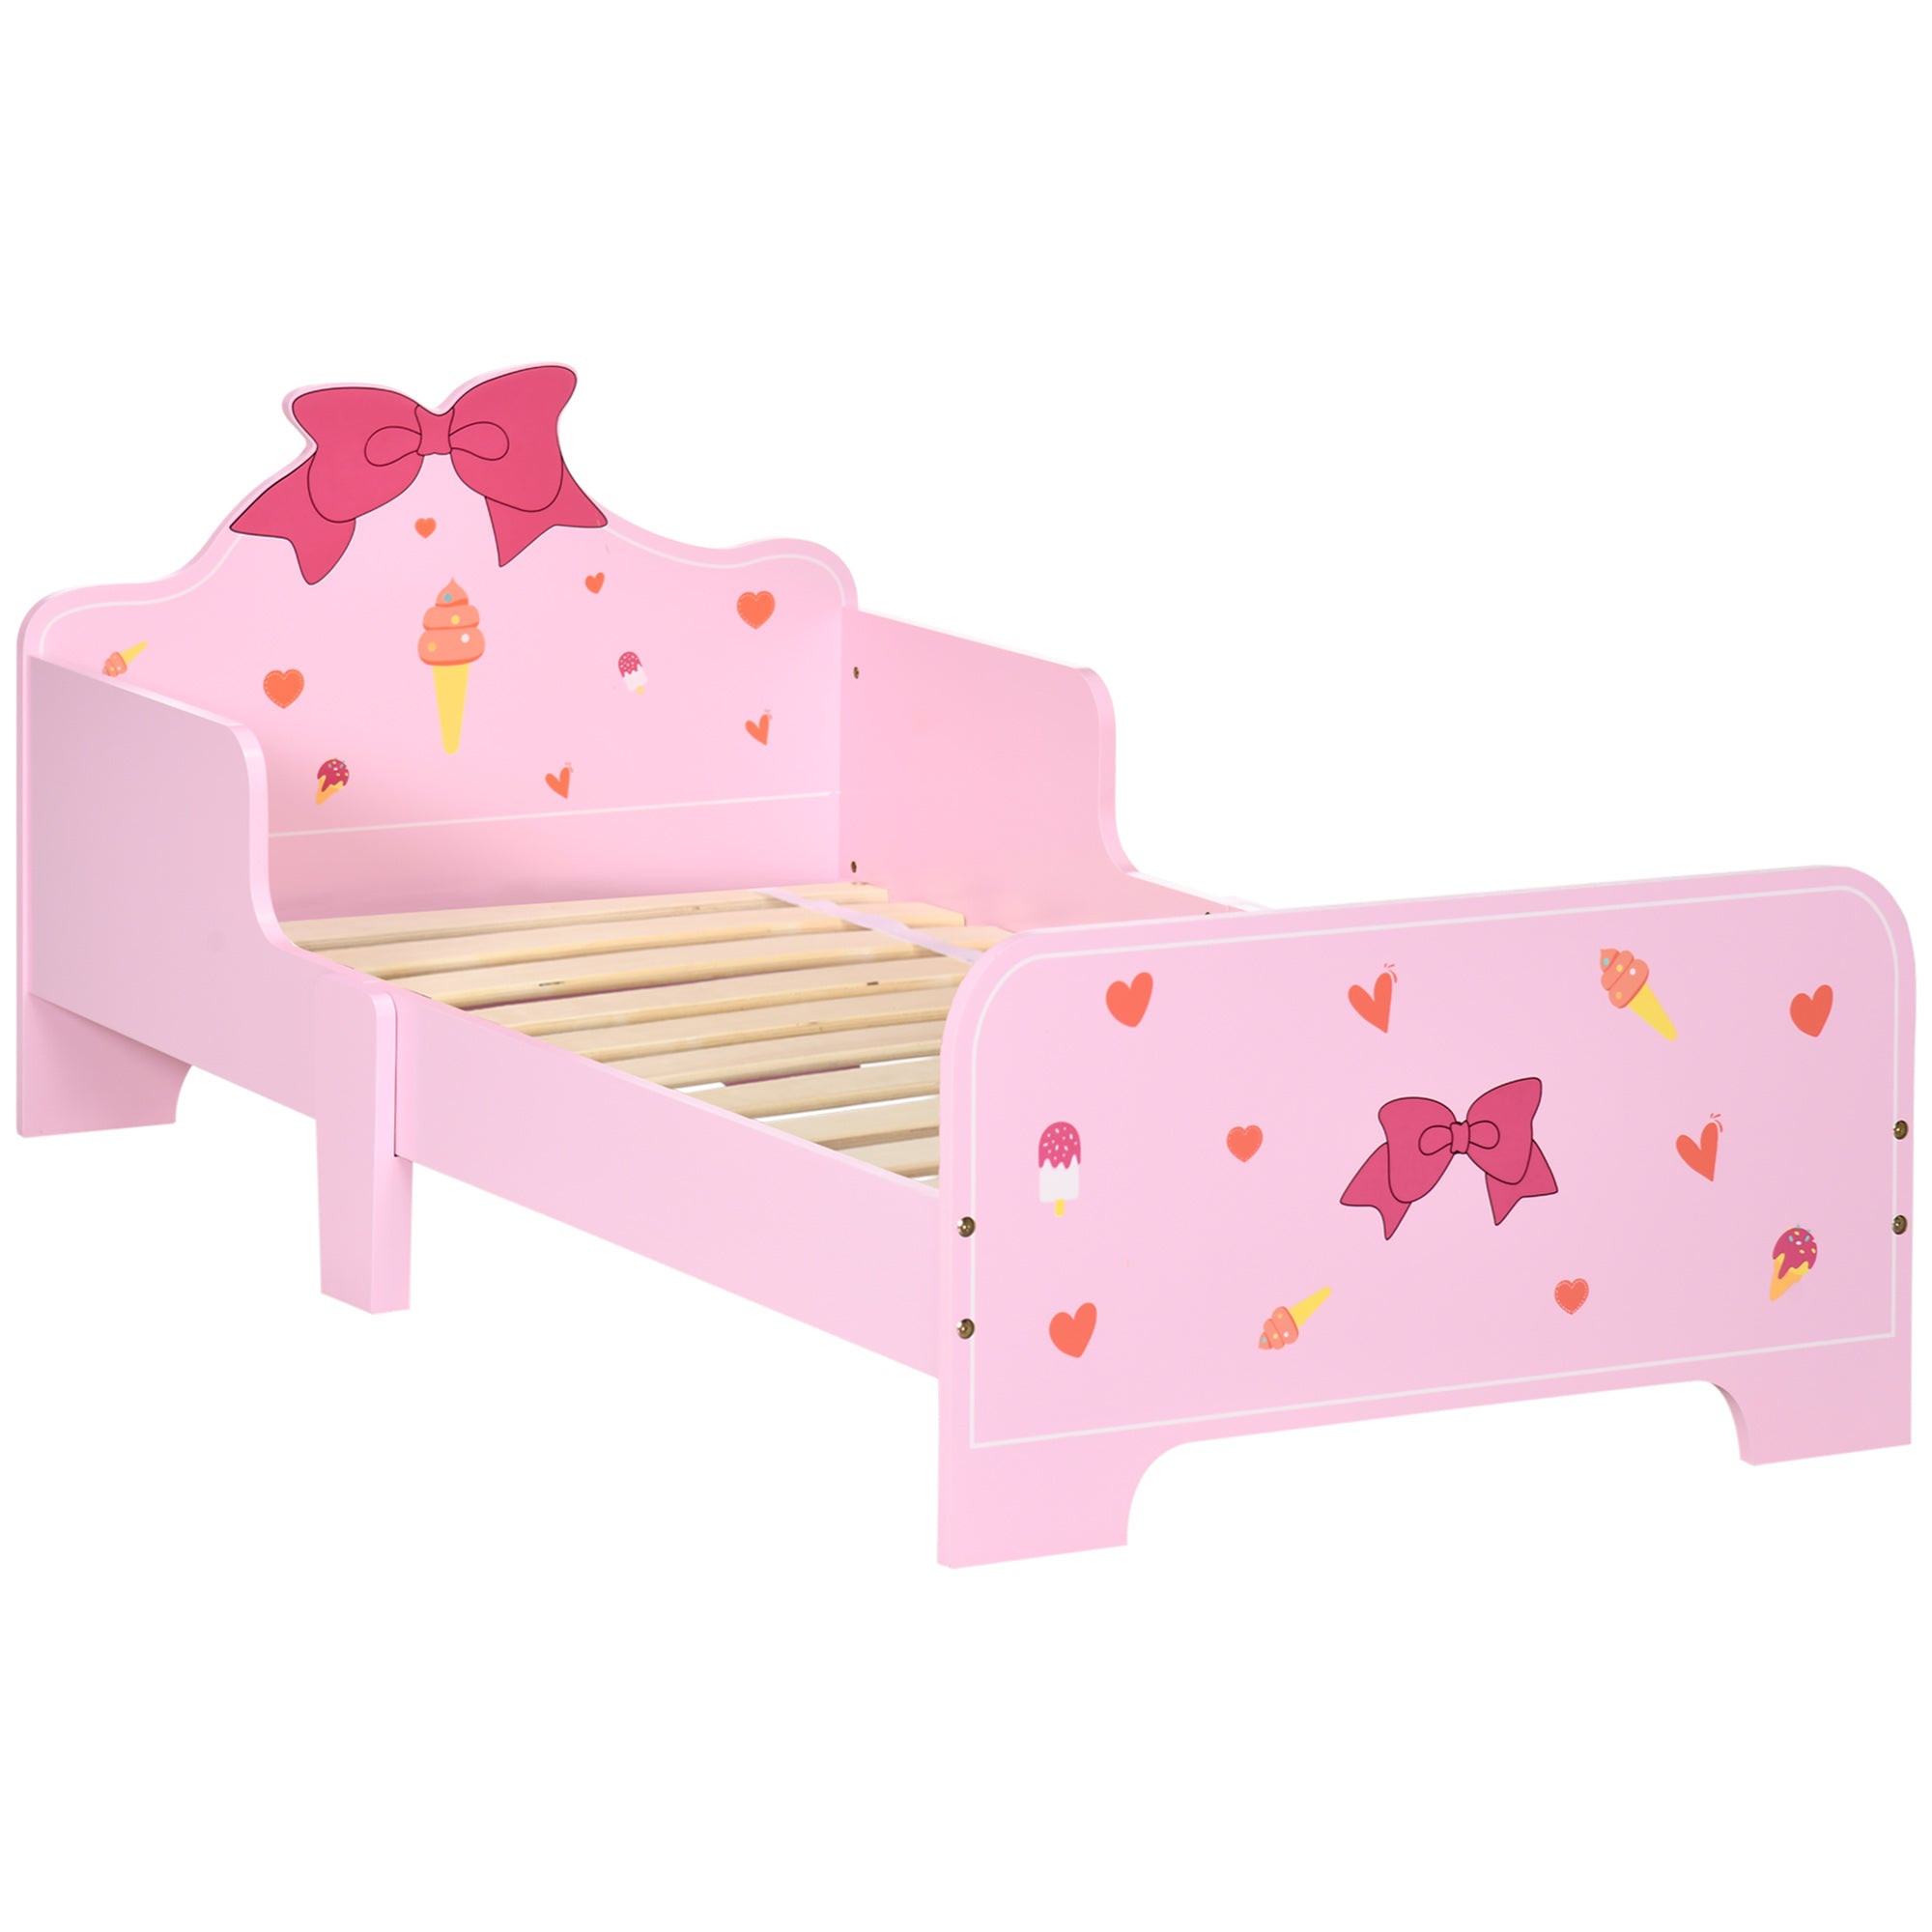 ZONEKIZ Kids Toddler Bed w/ Cute Patterns - Safety Rails - Pink  | TJ Hughes